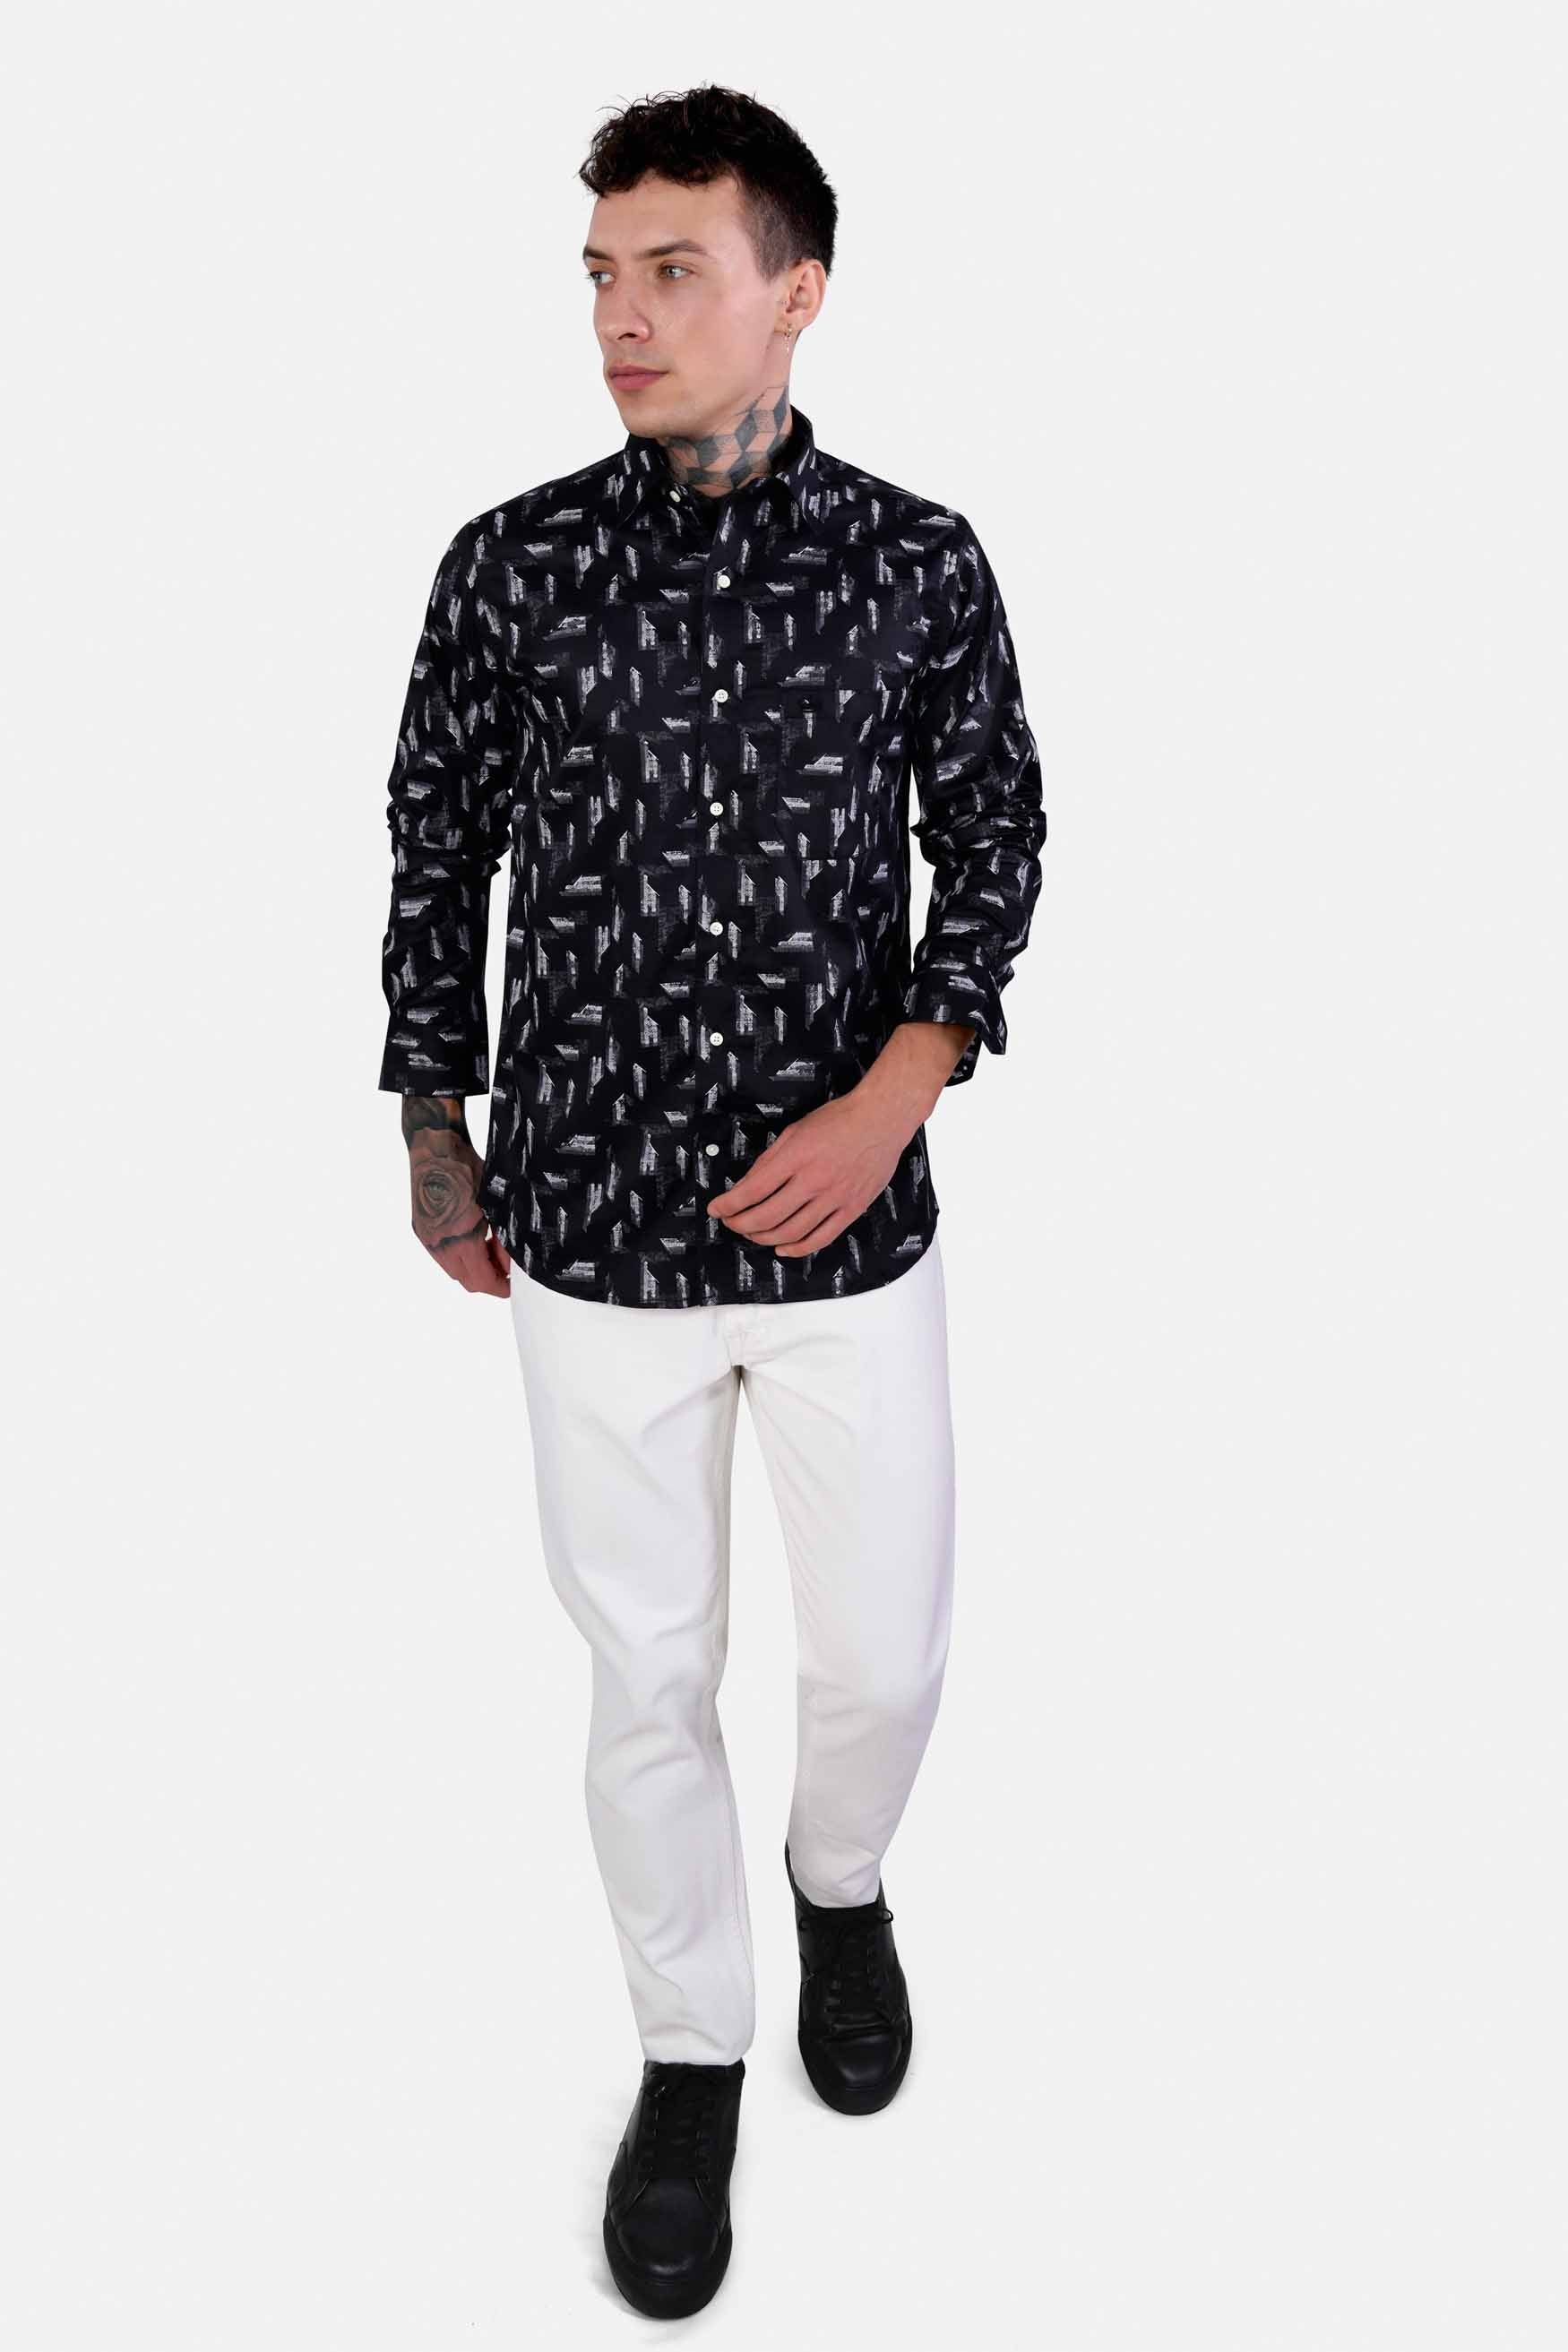 Jade Black and Regent Gray Printed Subtle Sheen Super Soft Premium Cotton Shirt